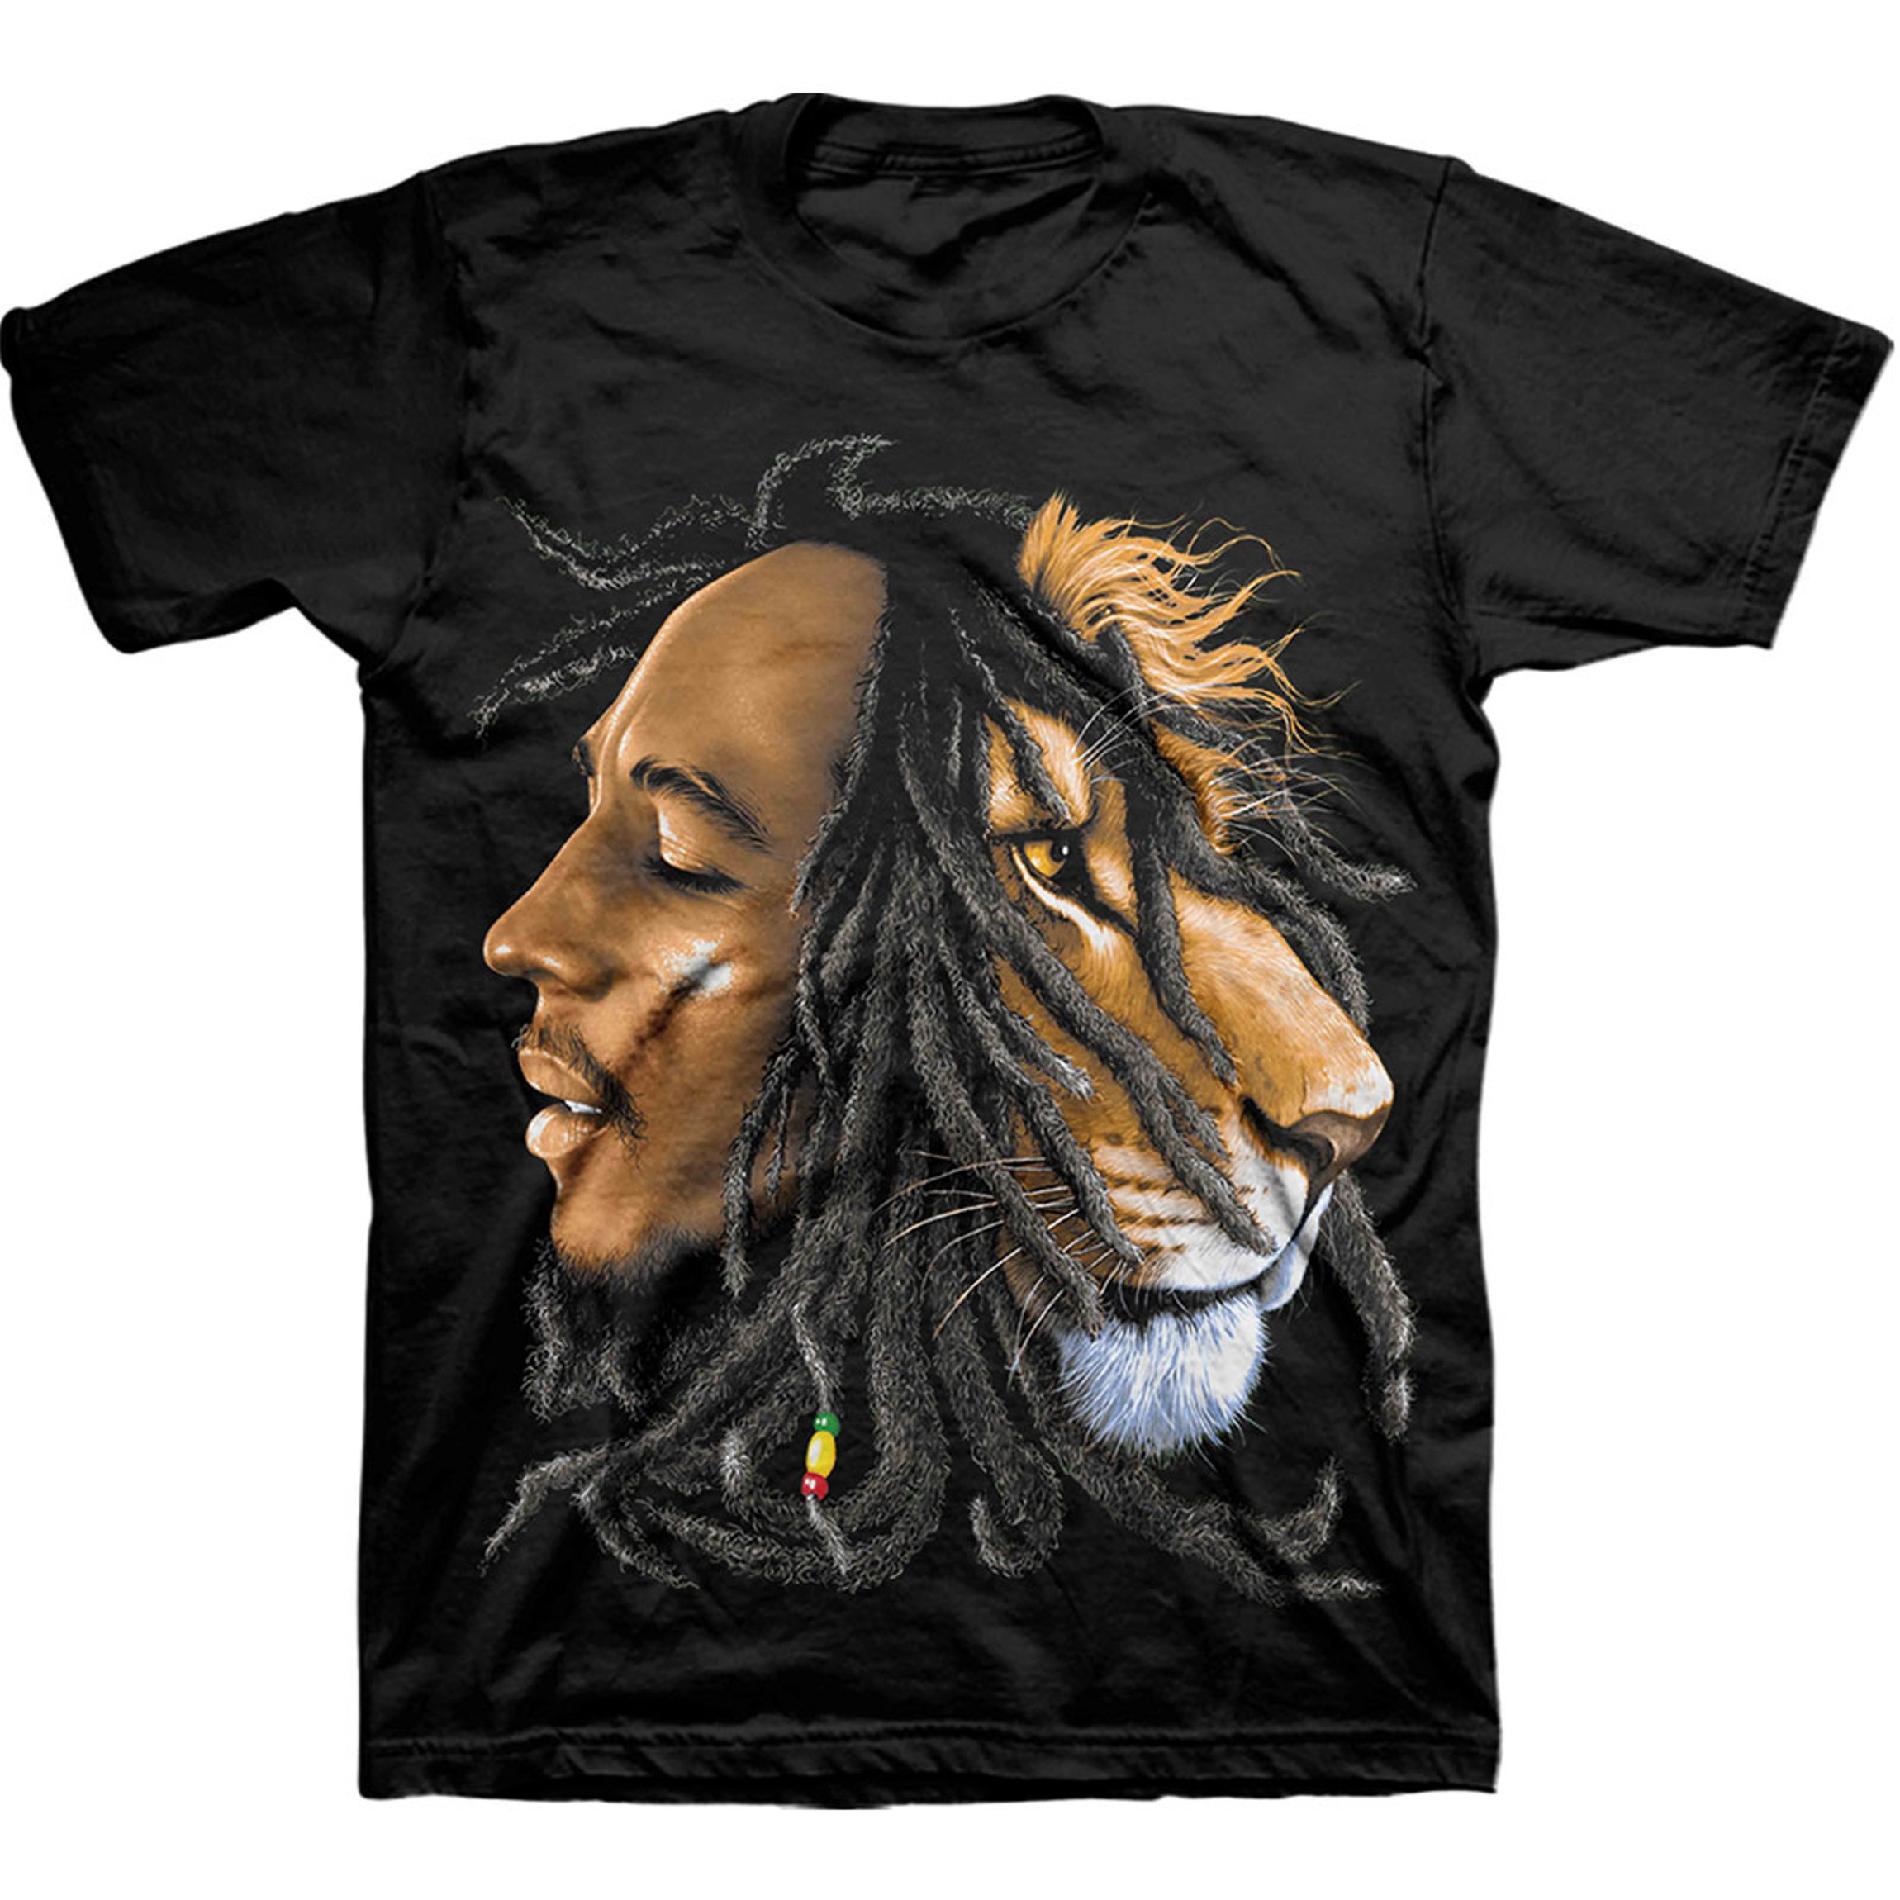 Bravado Bob Marley Men's Graphic T-Shirt - Lion